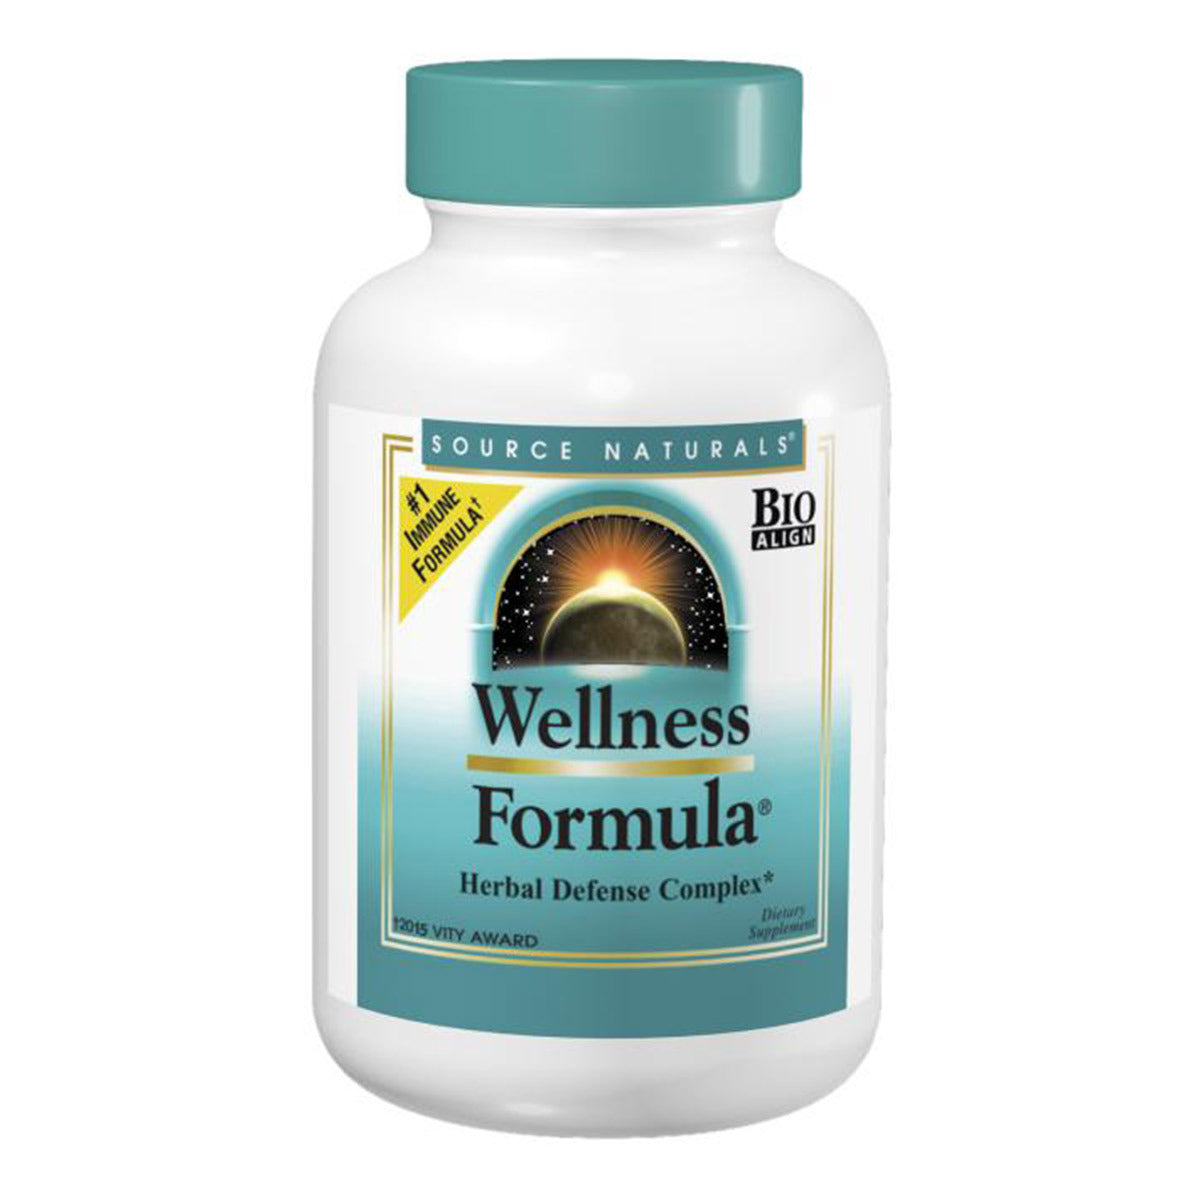 Primary image of Wellness Formula